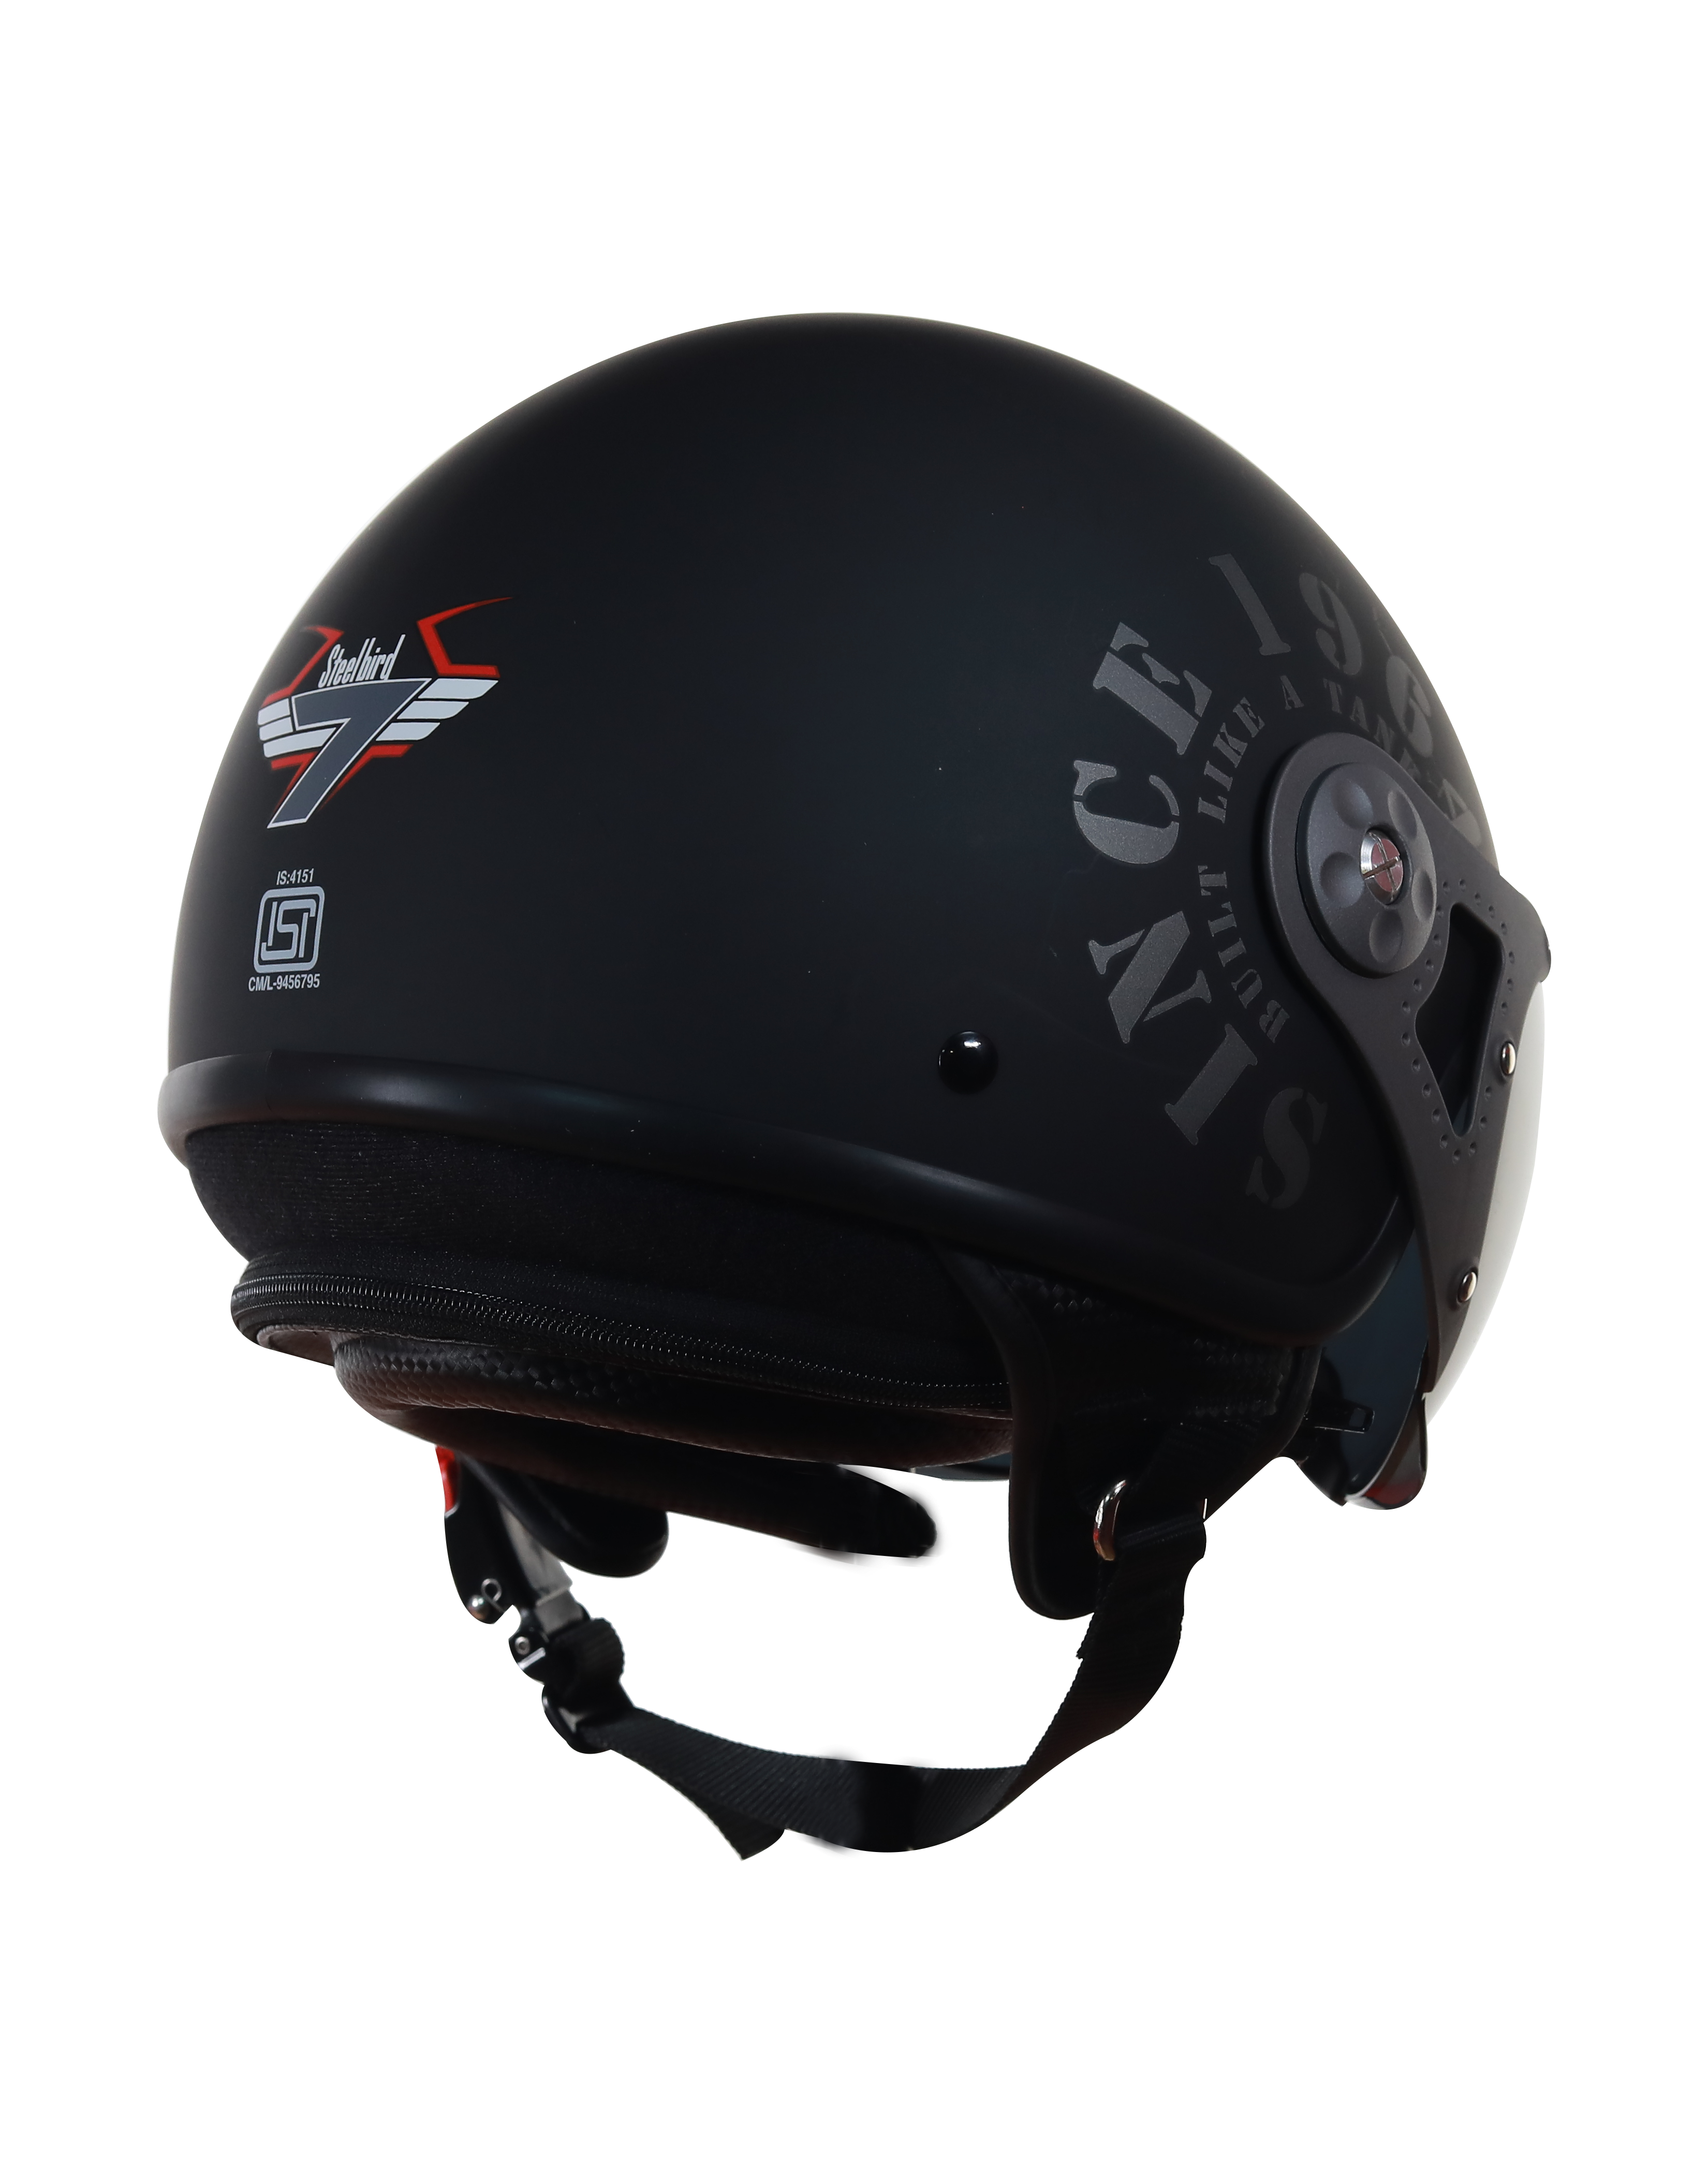 Steelbird SB-27 7Wings Tank Open Face Graphic Helmet (Matt Black Grey With Chrome Rainbow Visor)